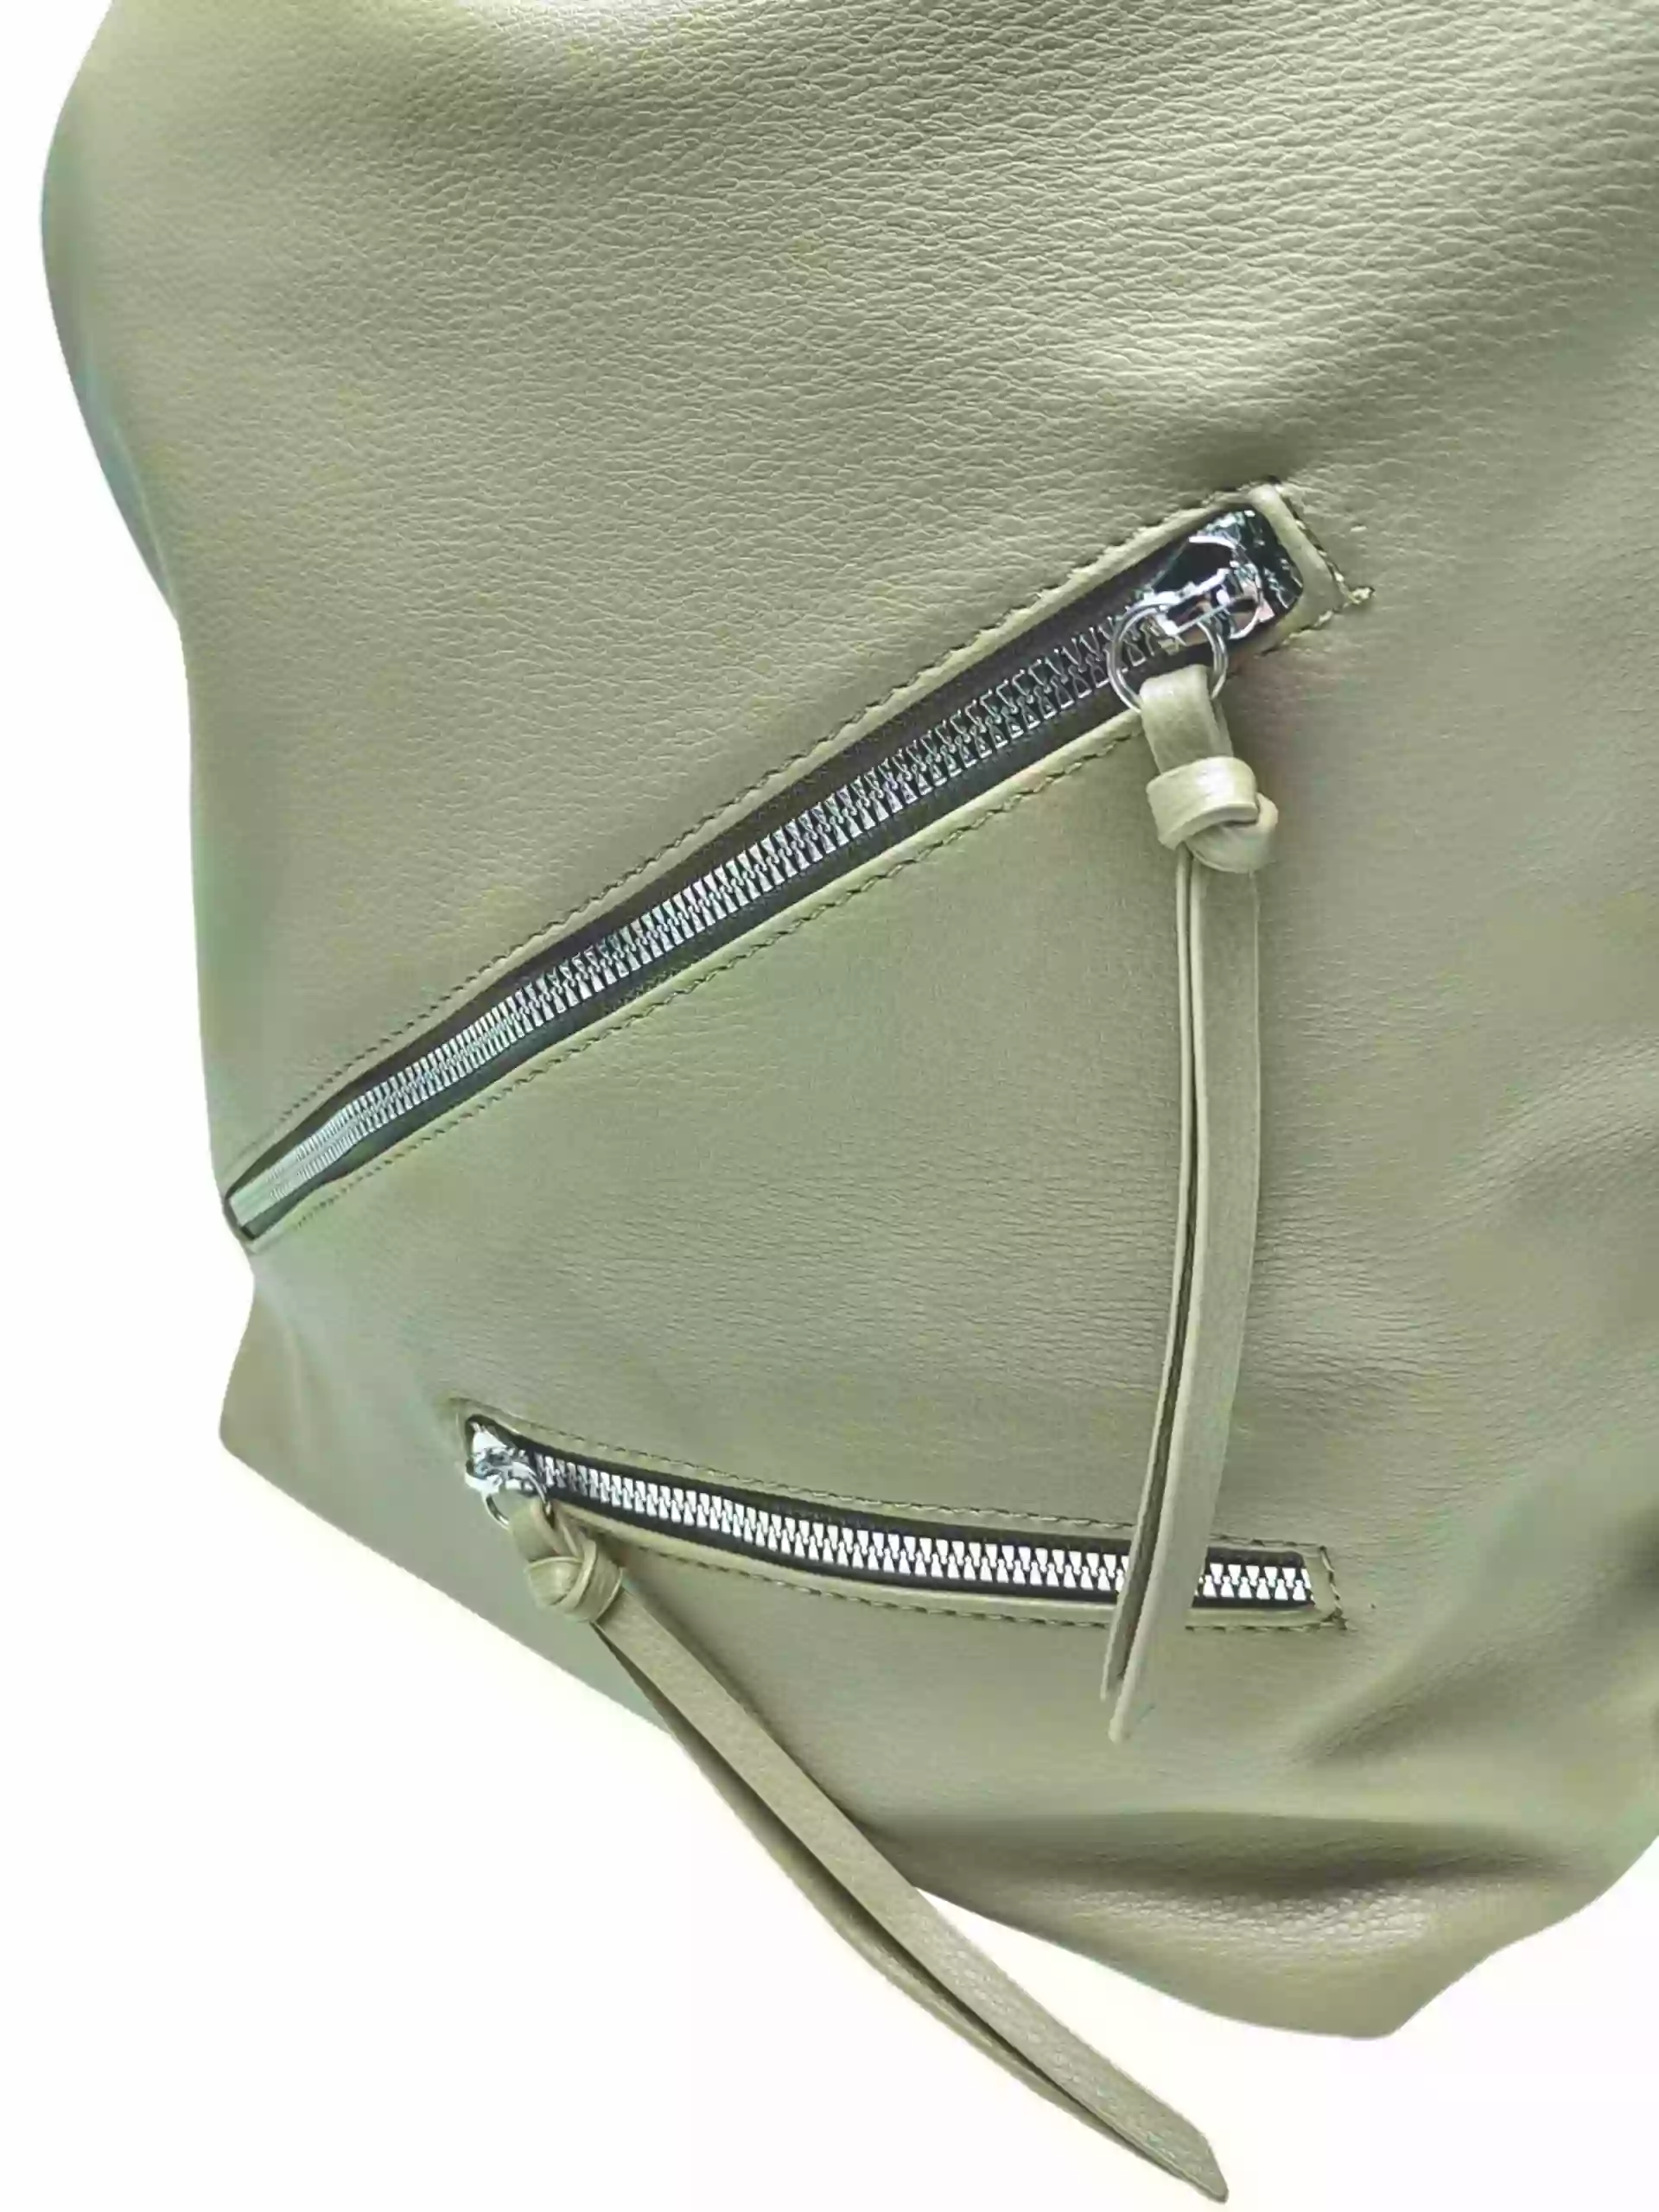 Velká khaki / hnědozelená kabelka a batoh v jednom, Tapple, X368, detail kabelko-batohu 2v1